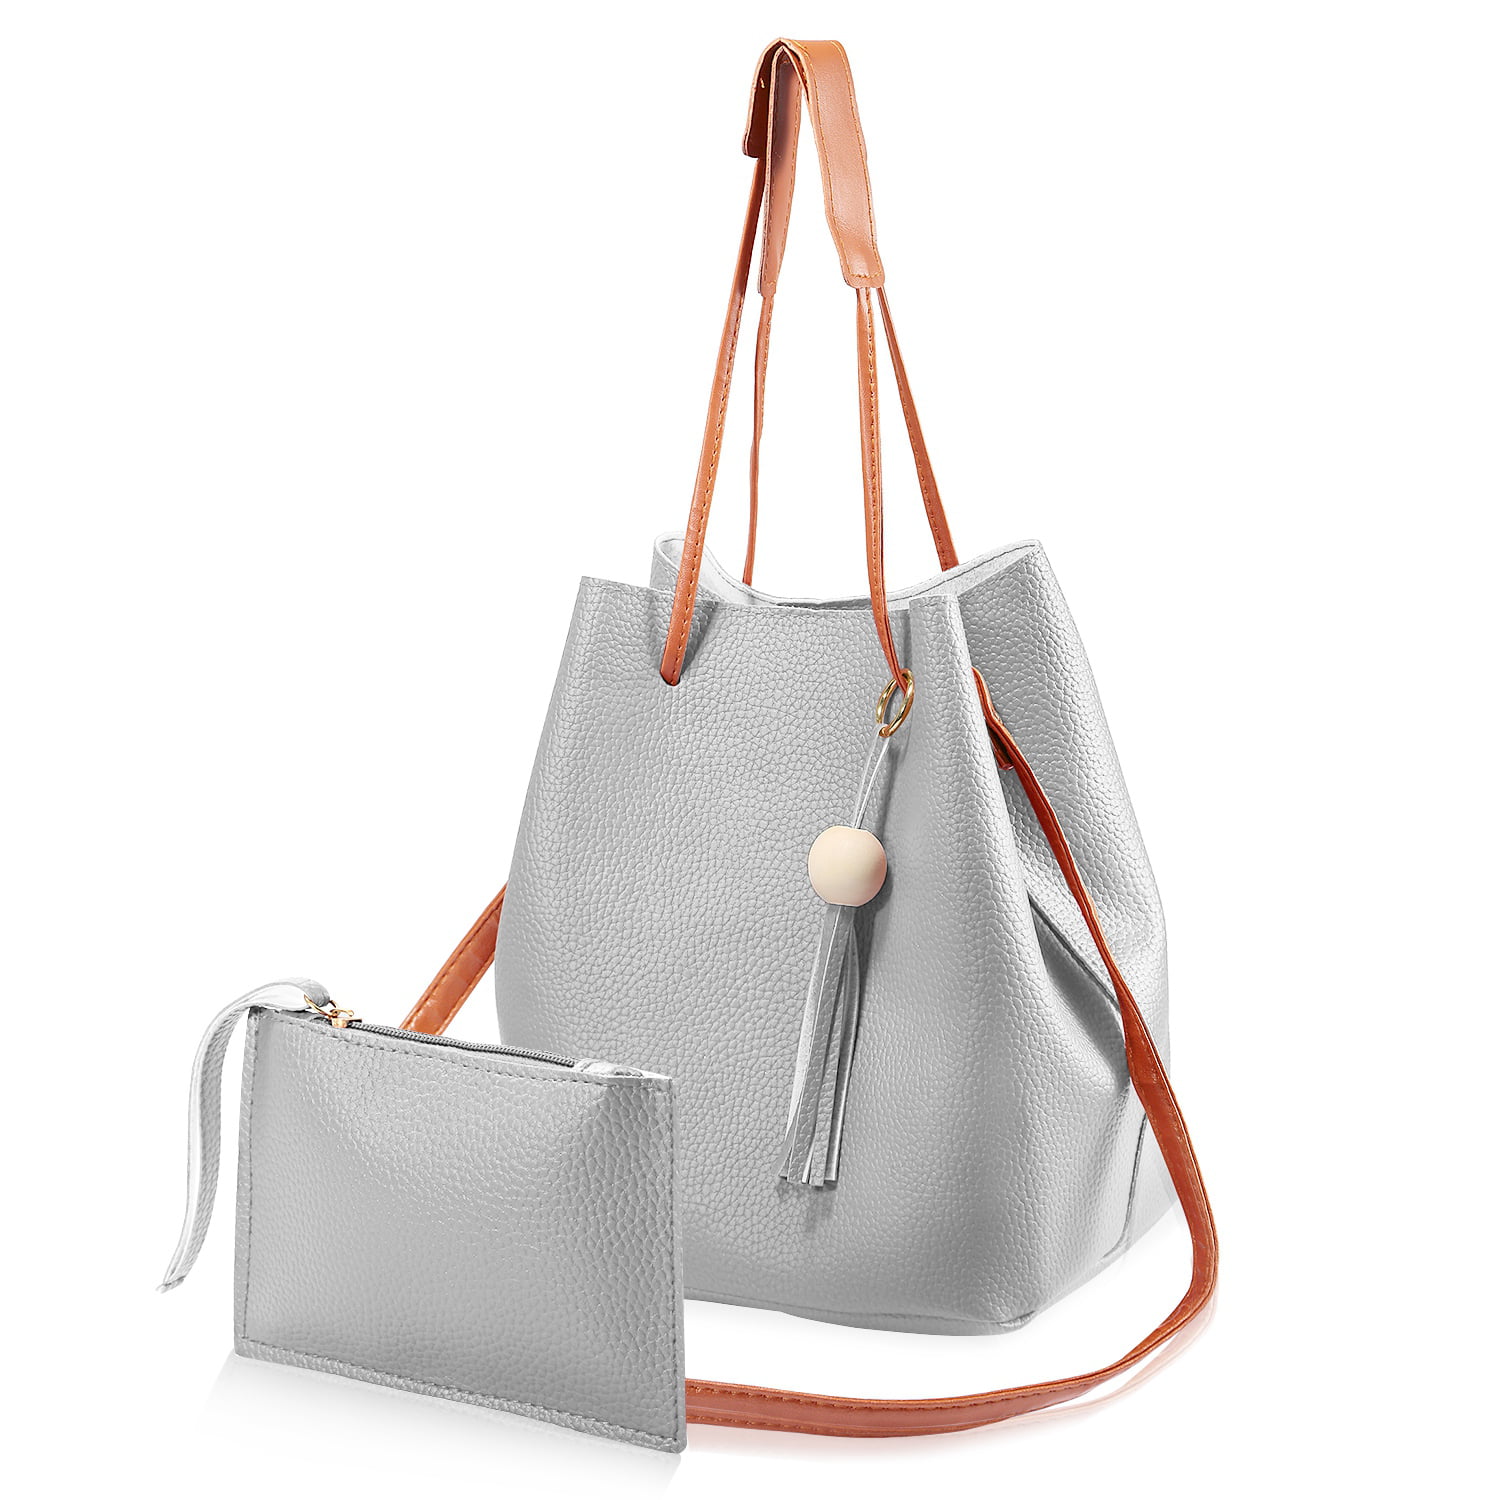 1Set/2Pcs Women Leather Handbags Shoulder Bags Lady Crossbody Bags Clutch Purse - 0